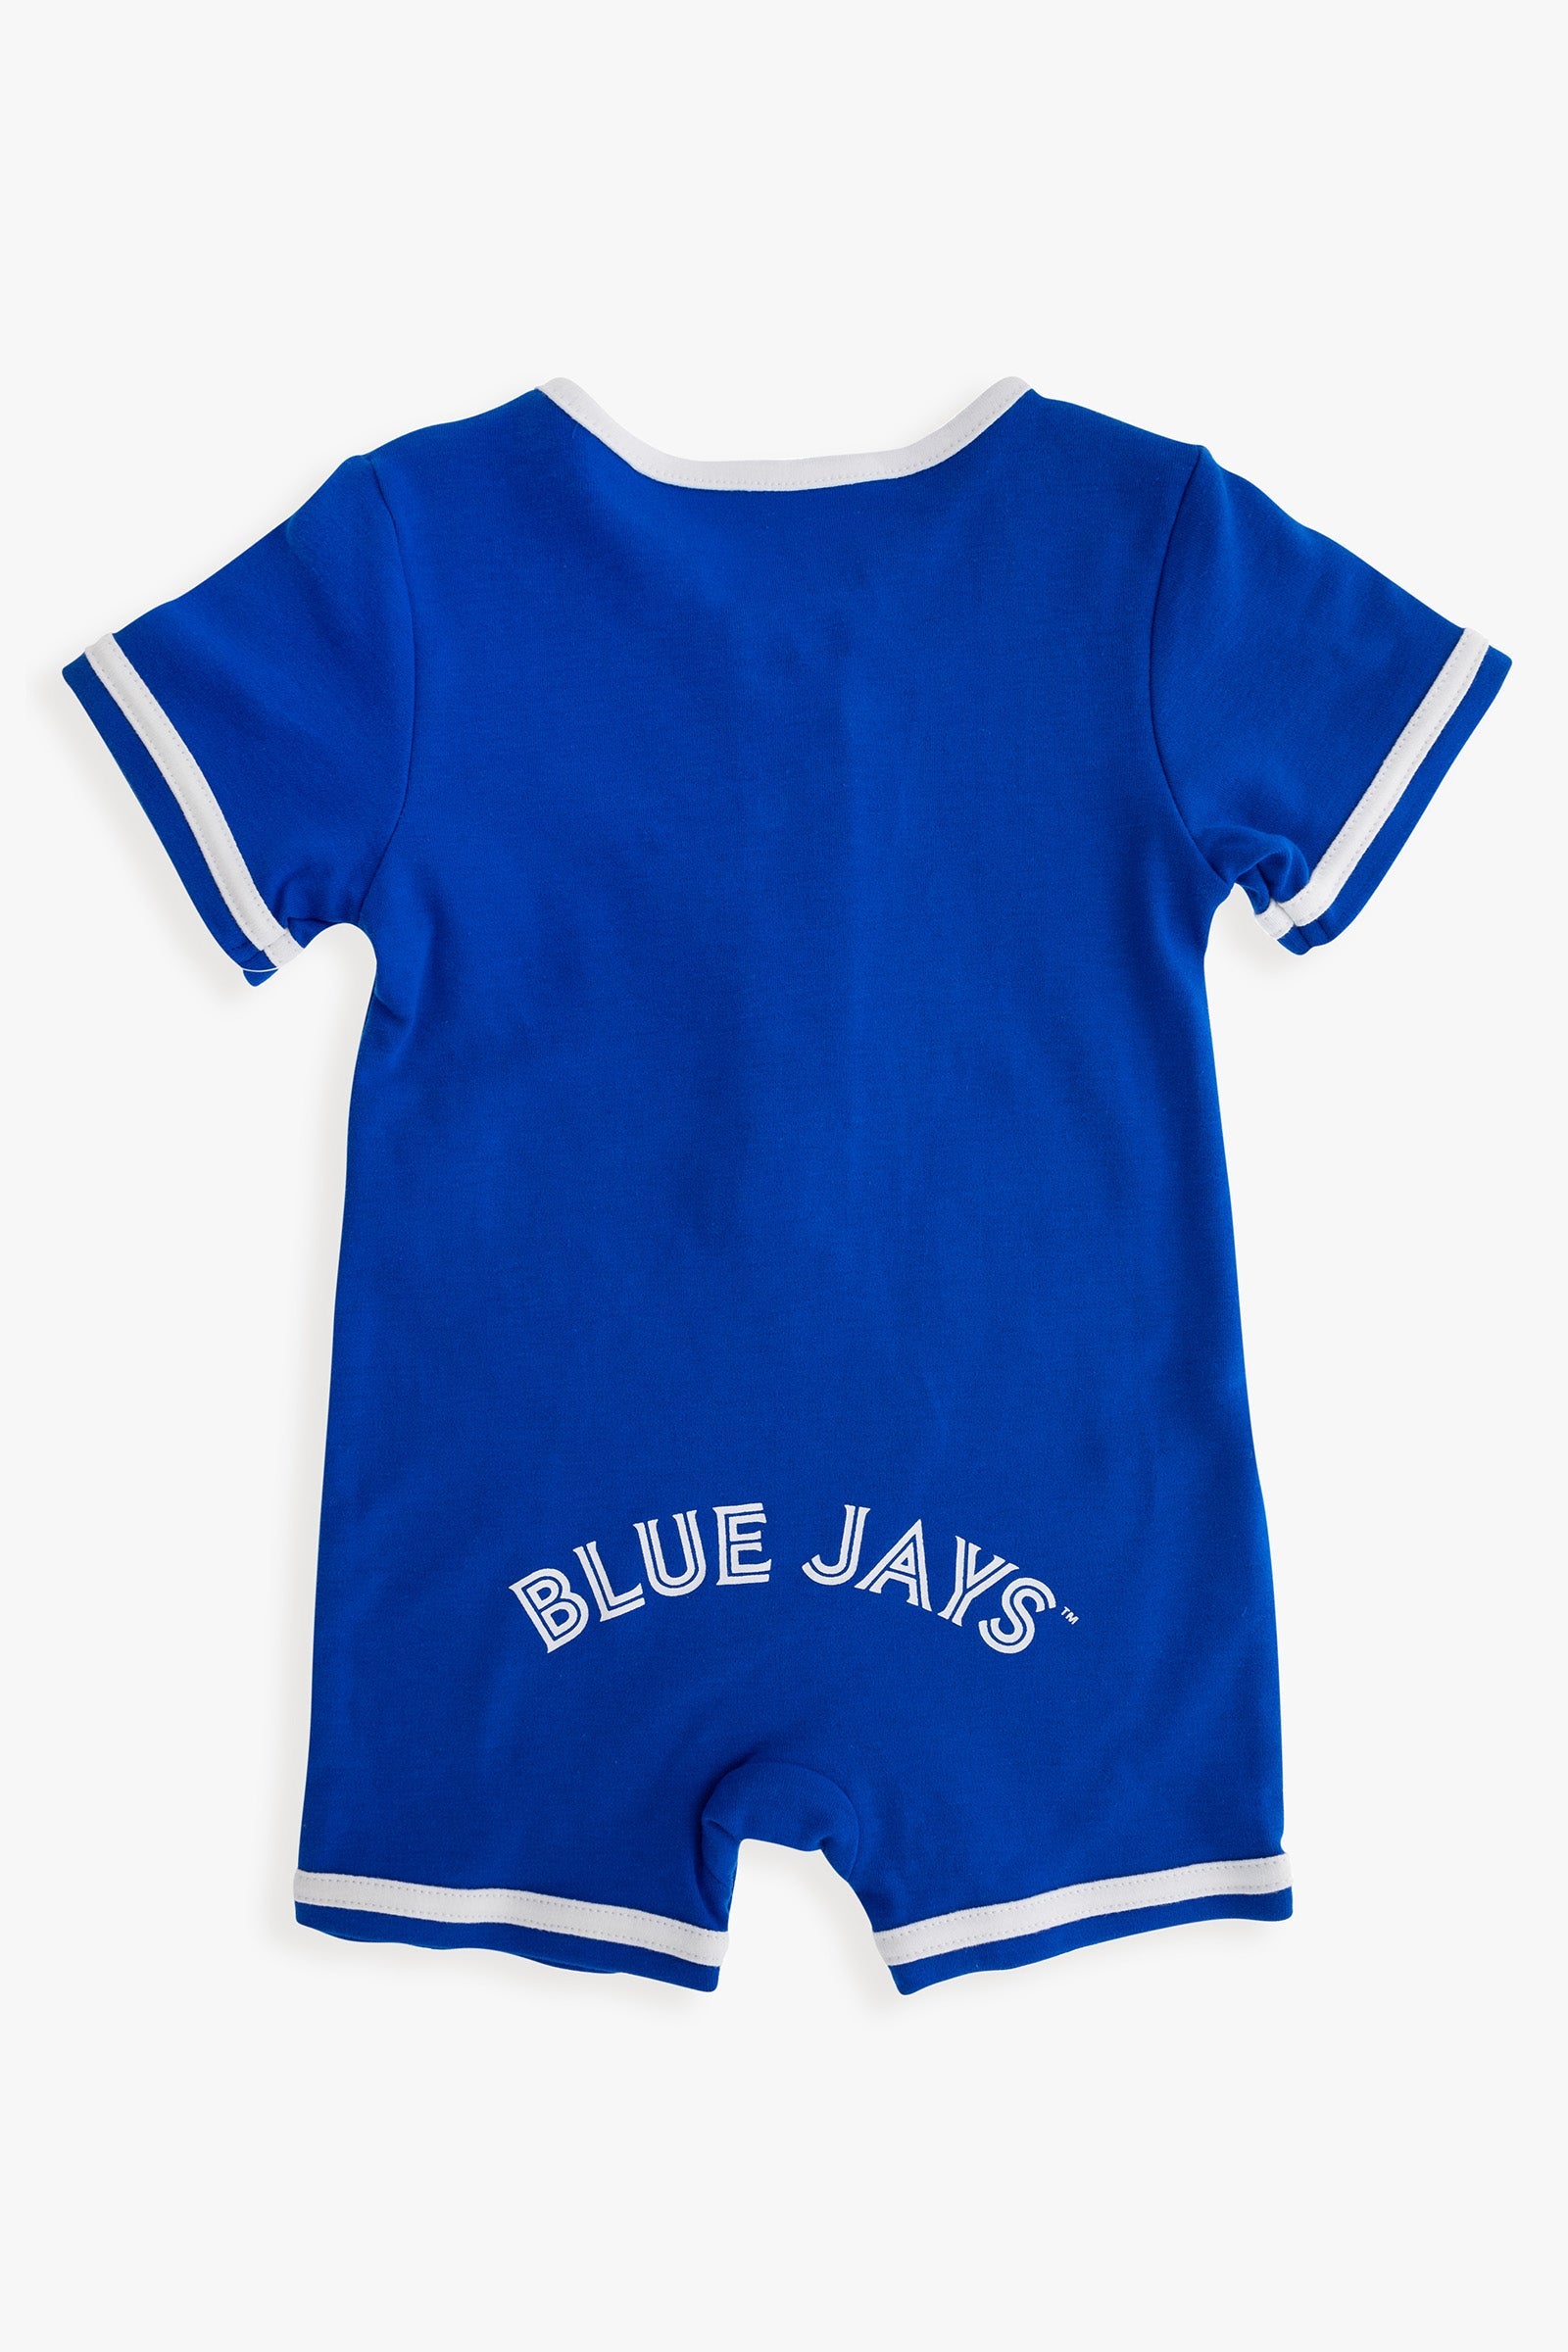 Baby Toronto Blue Jays Gear, Toddler, Blue Jays Newborn Baseball Clothing, Infant  Blue Jays Apparel